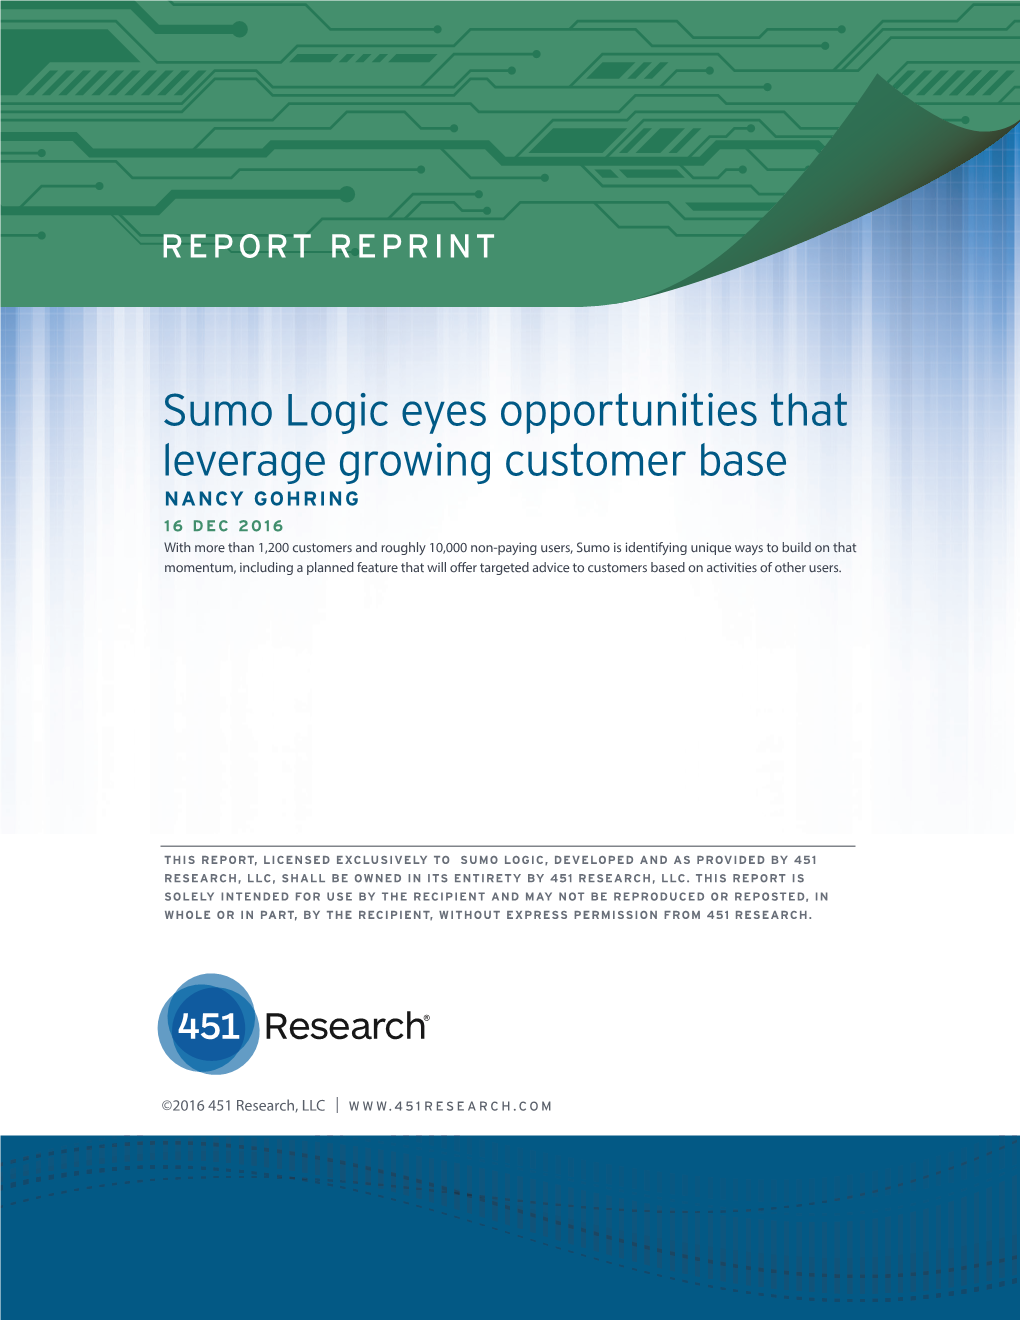 Sumo Logic Eyes Opportunities That Leverage Growing Customer Base